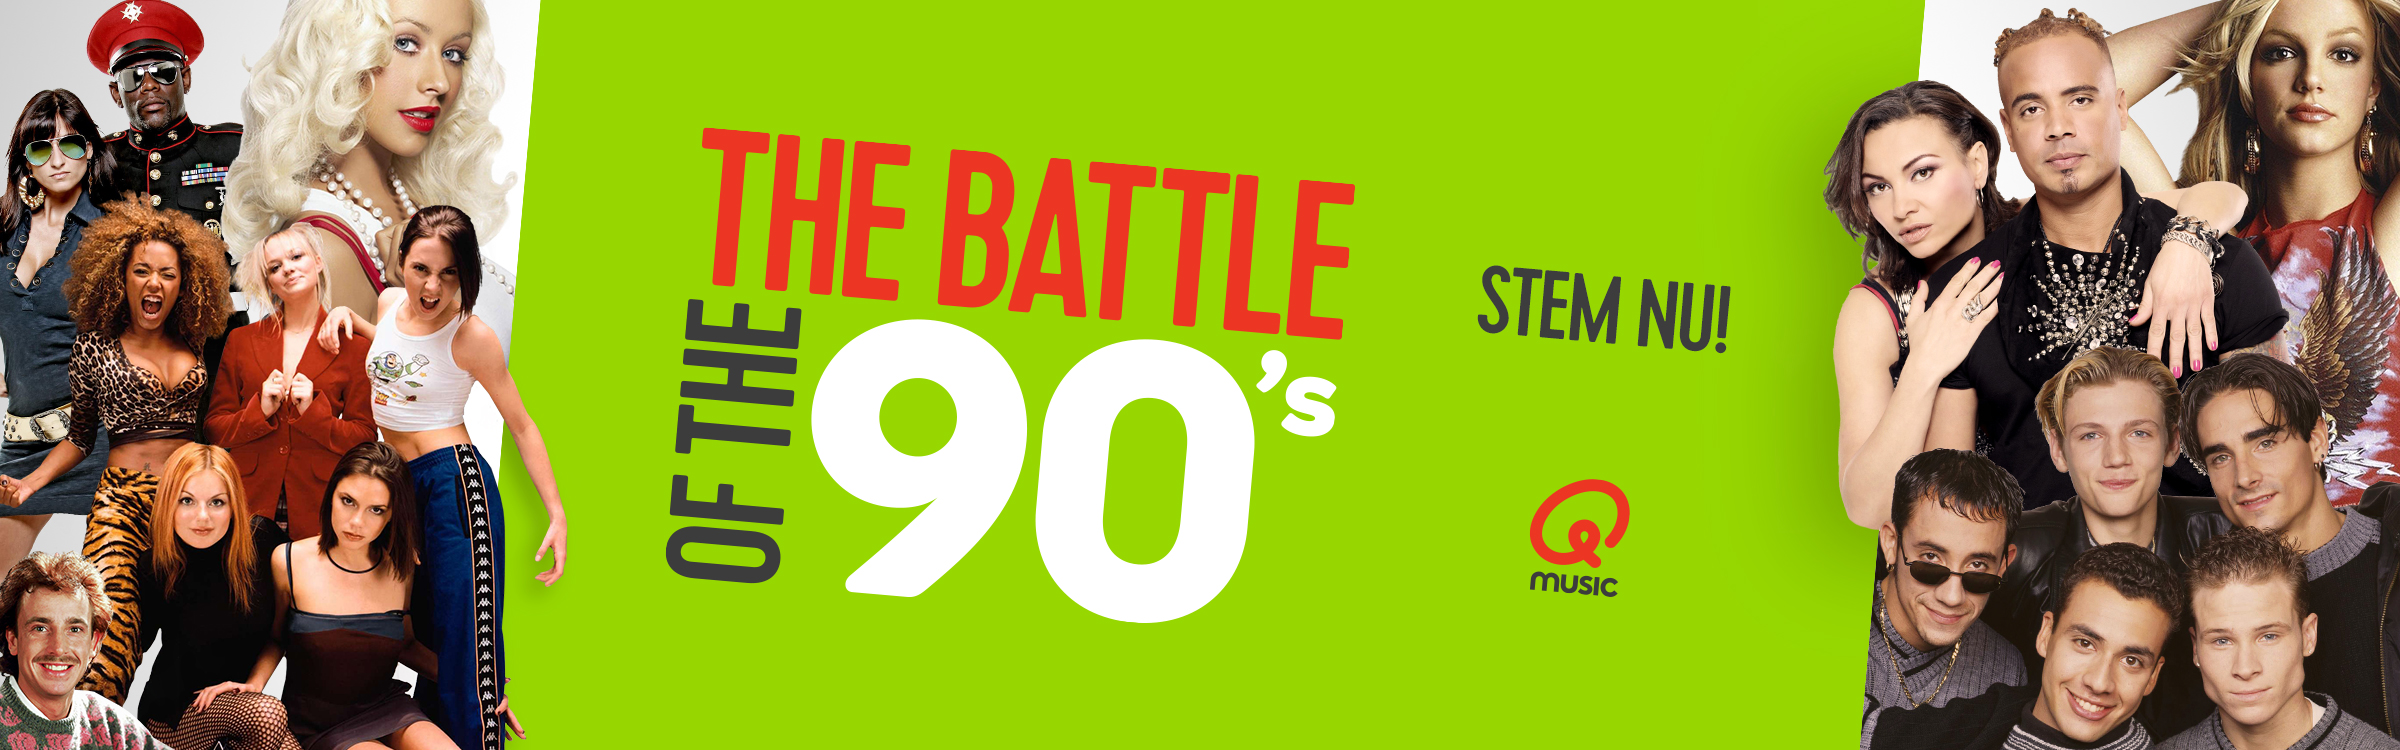 Qmusic actionheader top500 90s battles